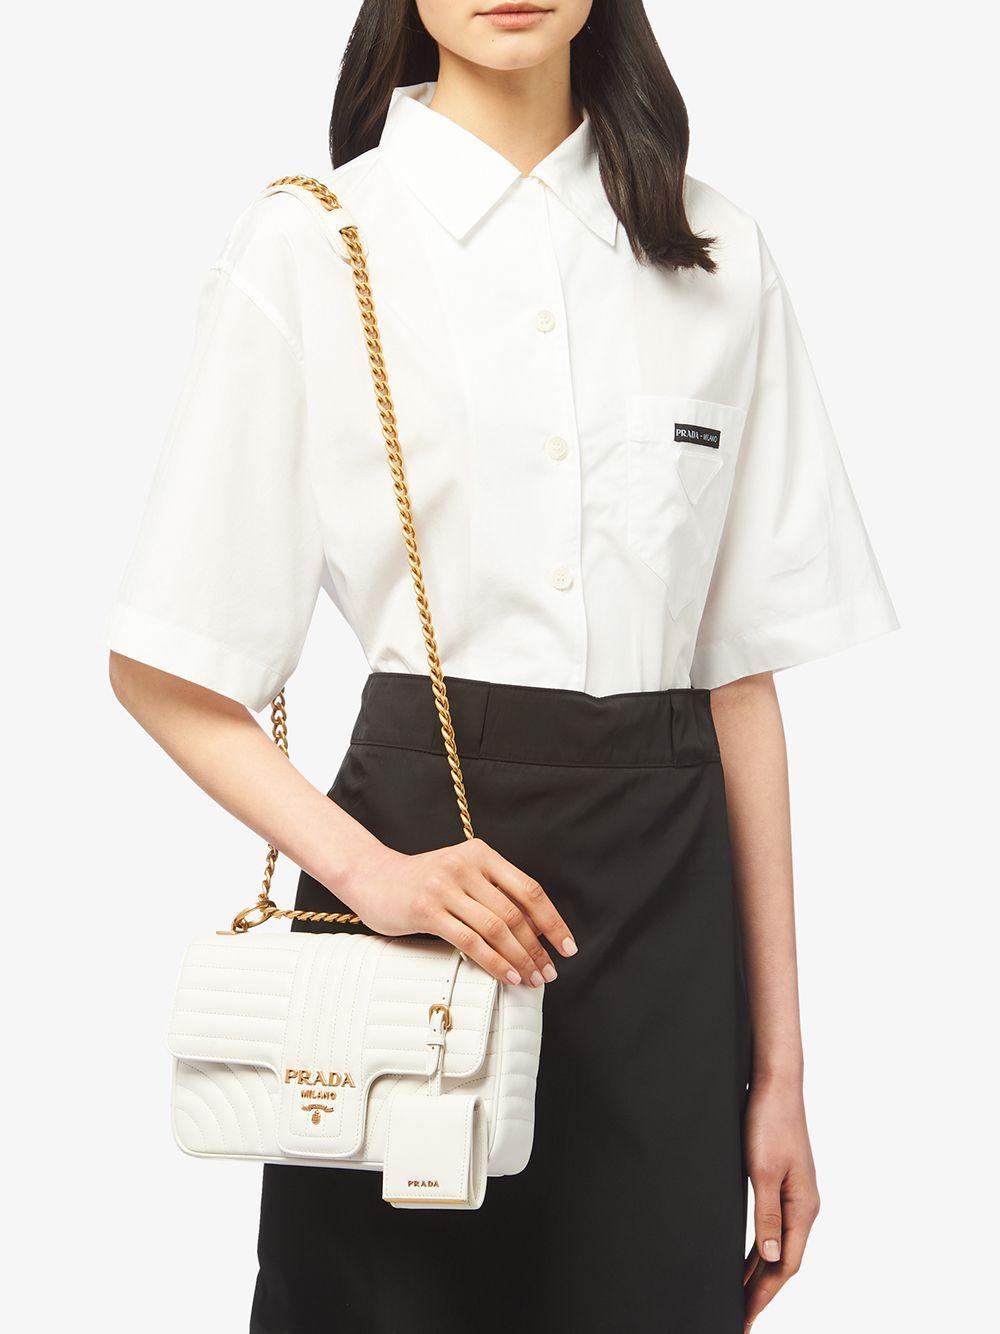 Prada Leather Diagramme Medium Shoulder Bag in White - Lyst